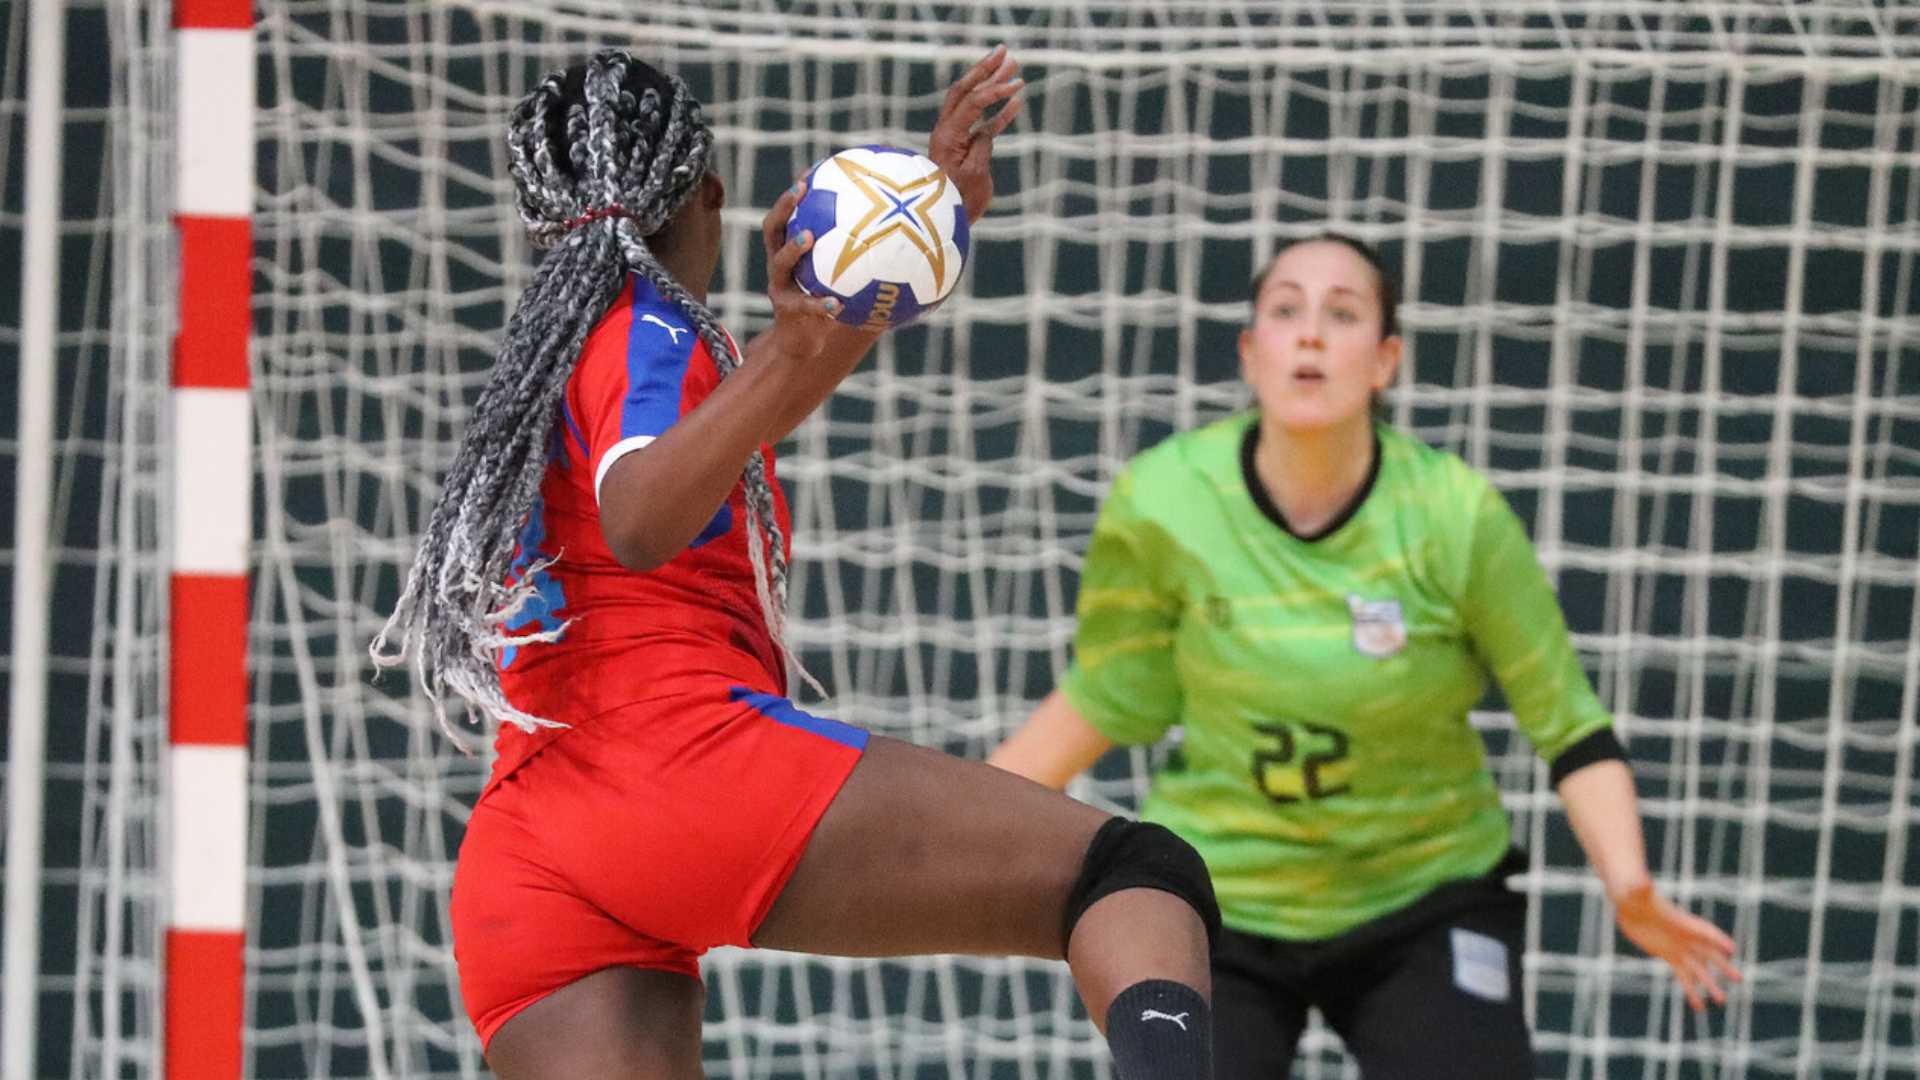 Handball at Santiago 2023 began with Cuba defeating Uruguay